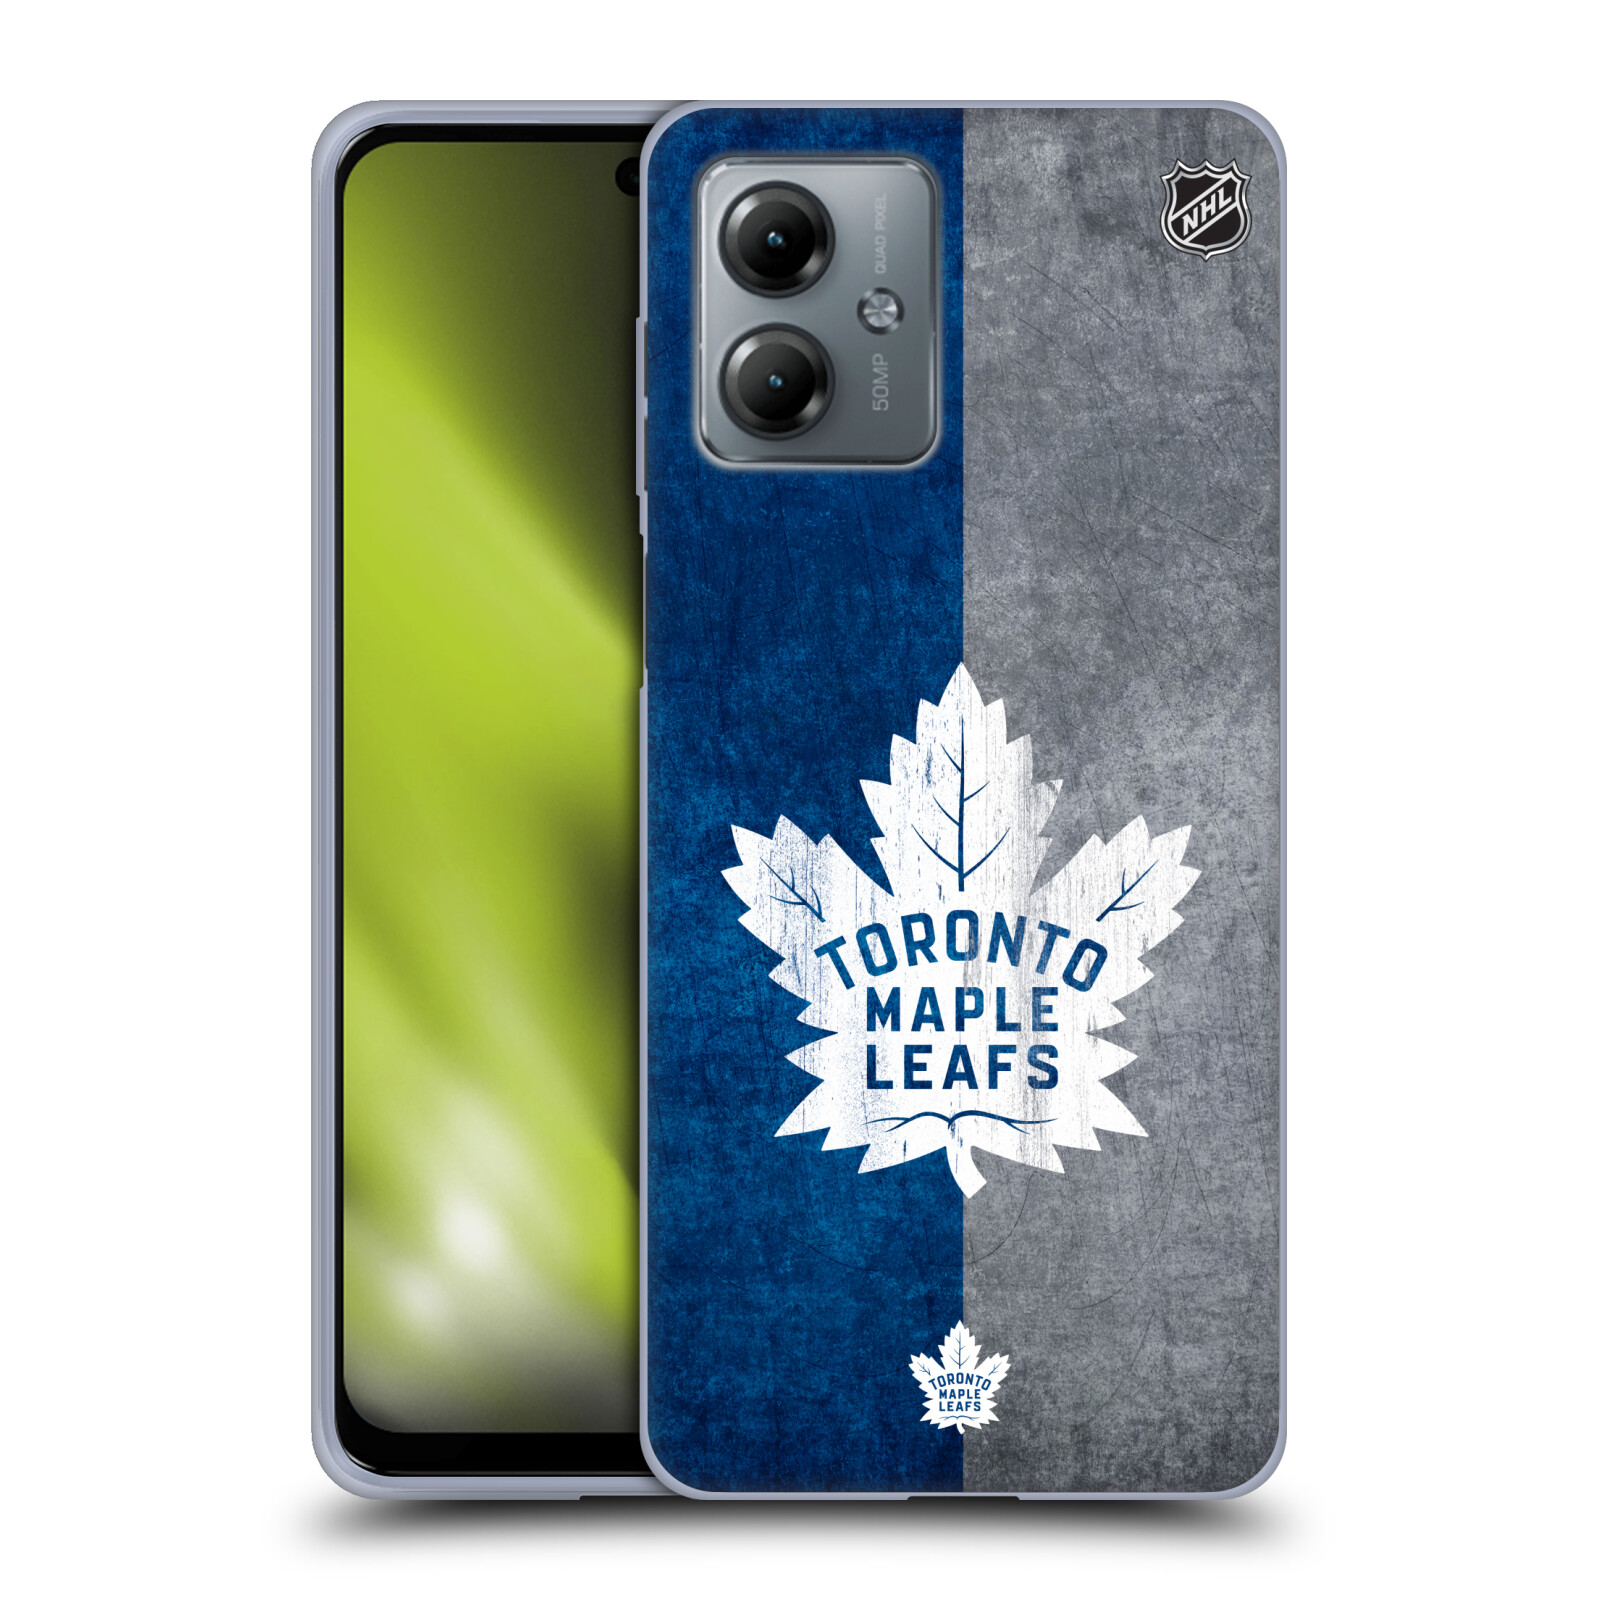 Silikonové pouzdro na mobil Motorola Moto G14 - NHL - Půlené logo Toronto Maple Leafs (Silikonový kryt, obal, pouzdro na mobilní telefon Motorola Moto G14 s licencovaným motivem NHL - Půlené logo Toronto Maple Leafs)